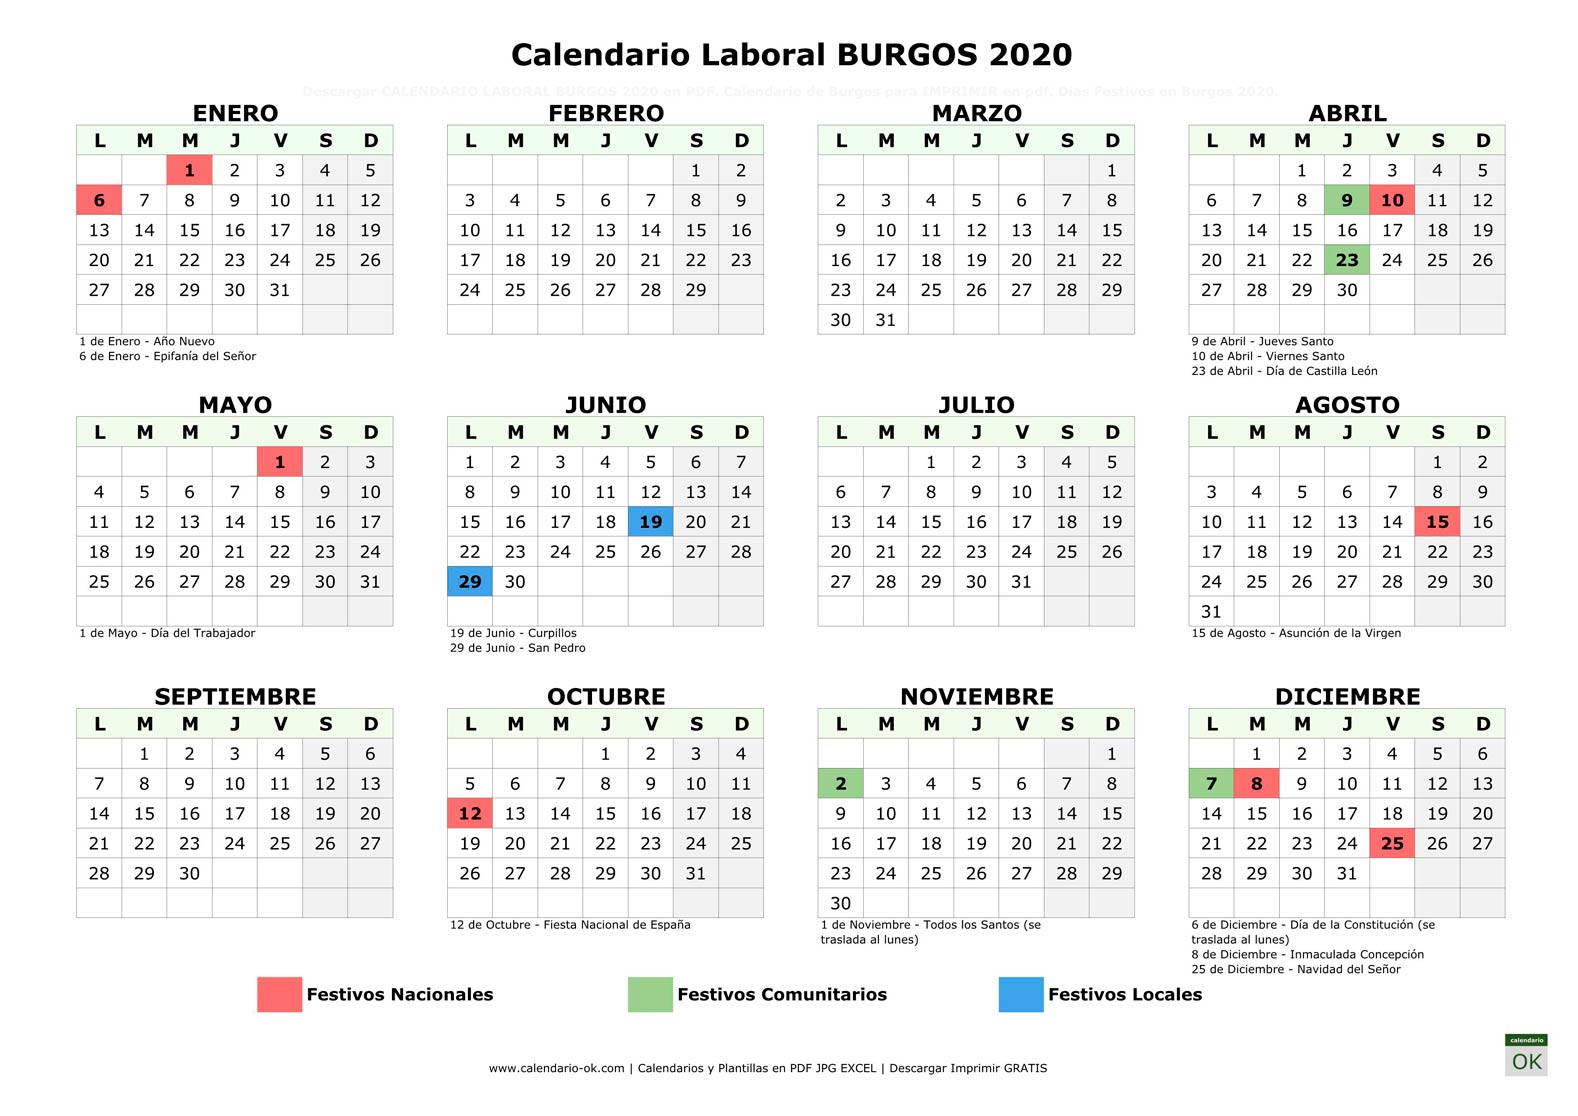 Calendario Laboral BURGOS 2020 horizontal